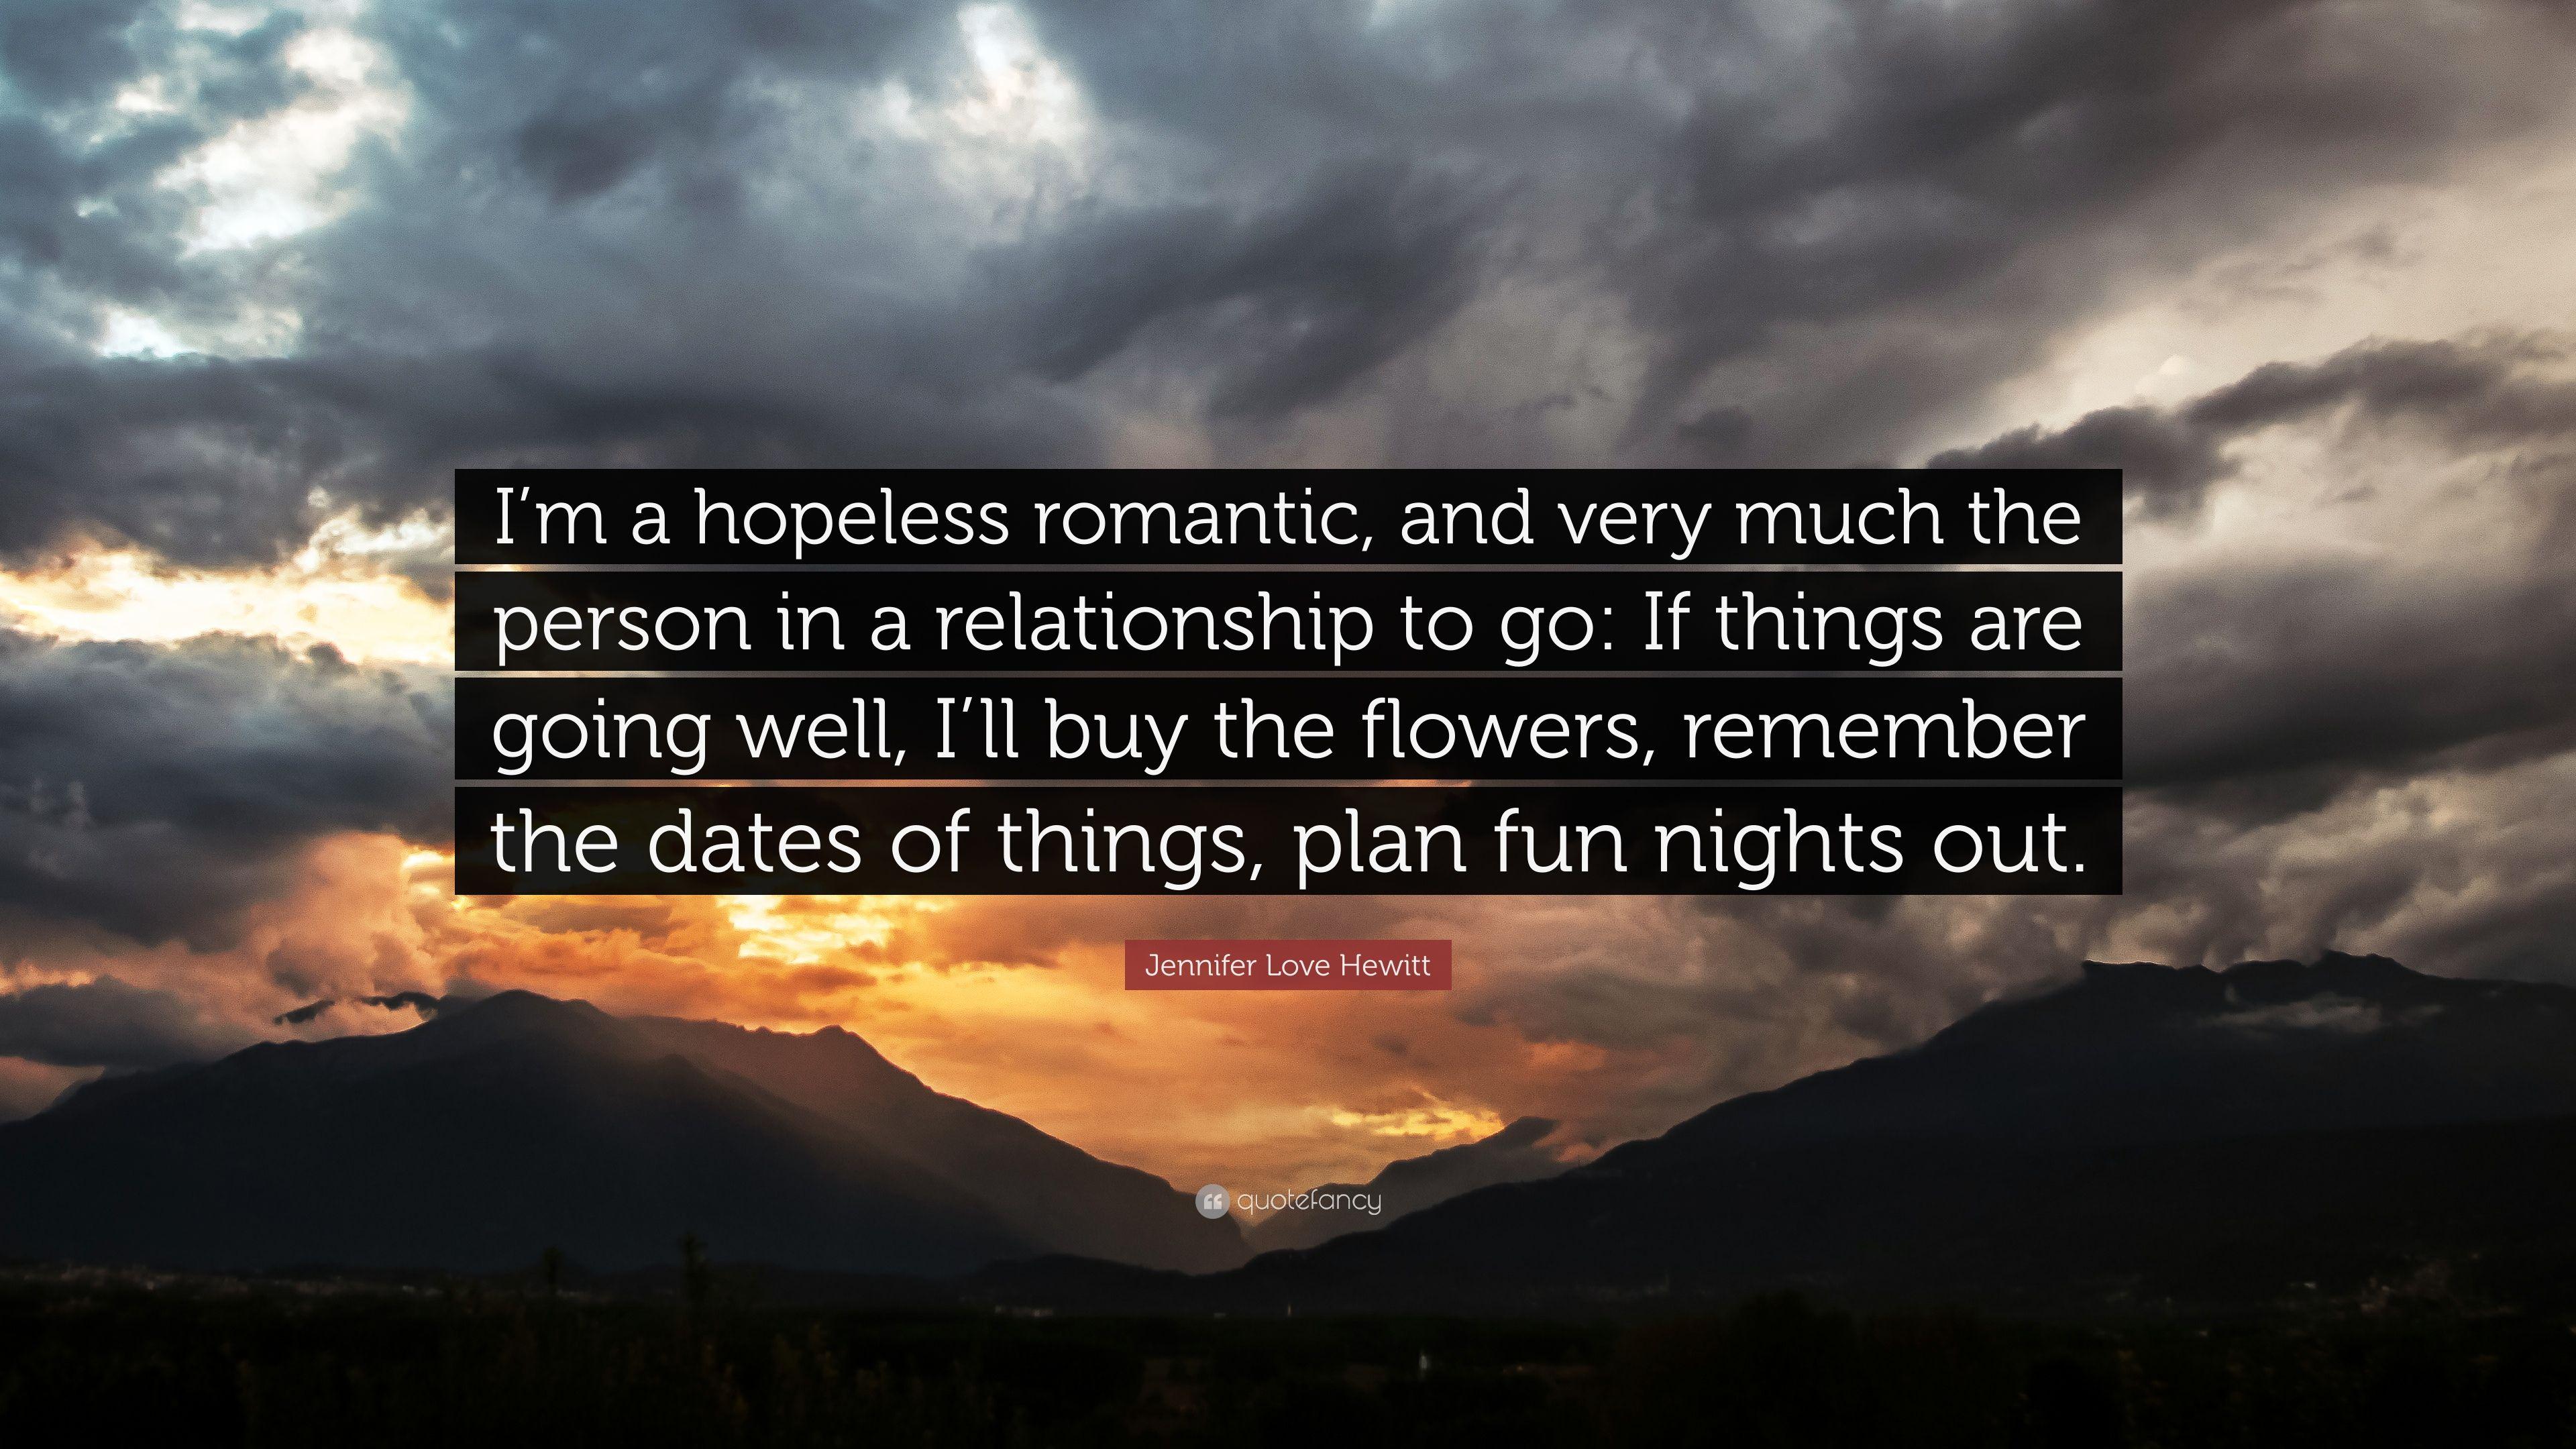 Jennifer Love Hewitt Quote: “I'm a hopeless romantic, and very